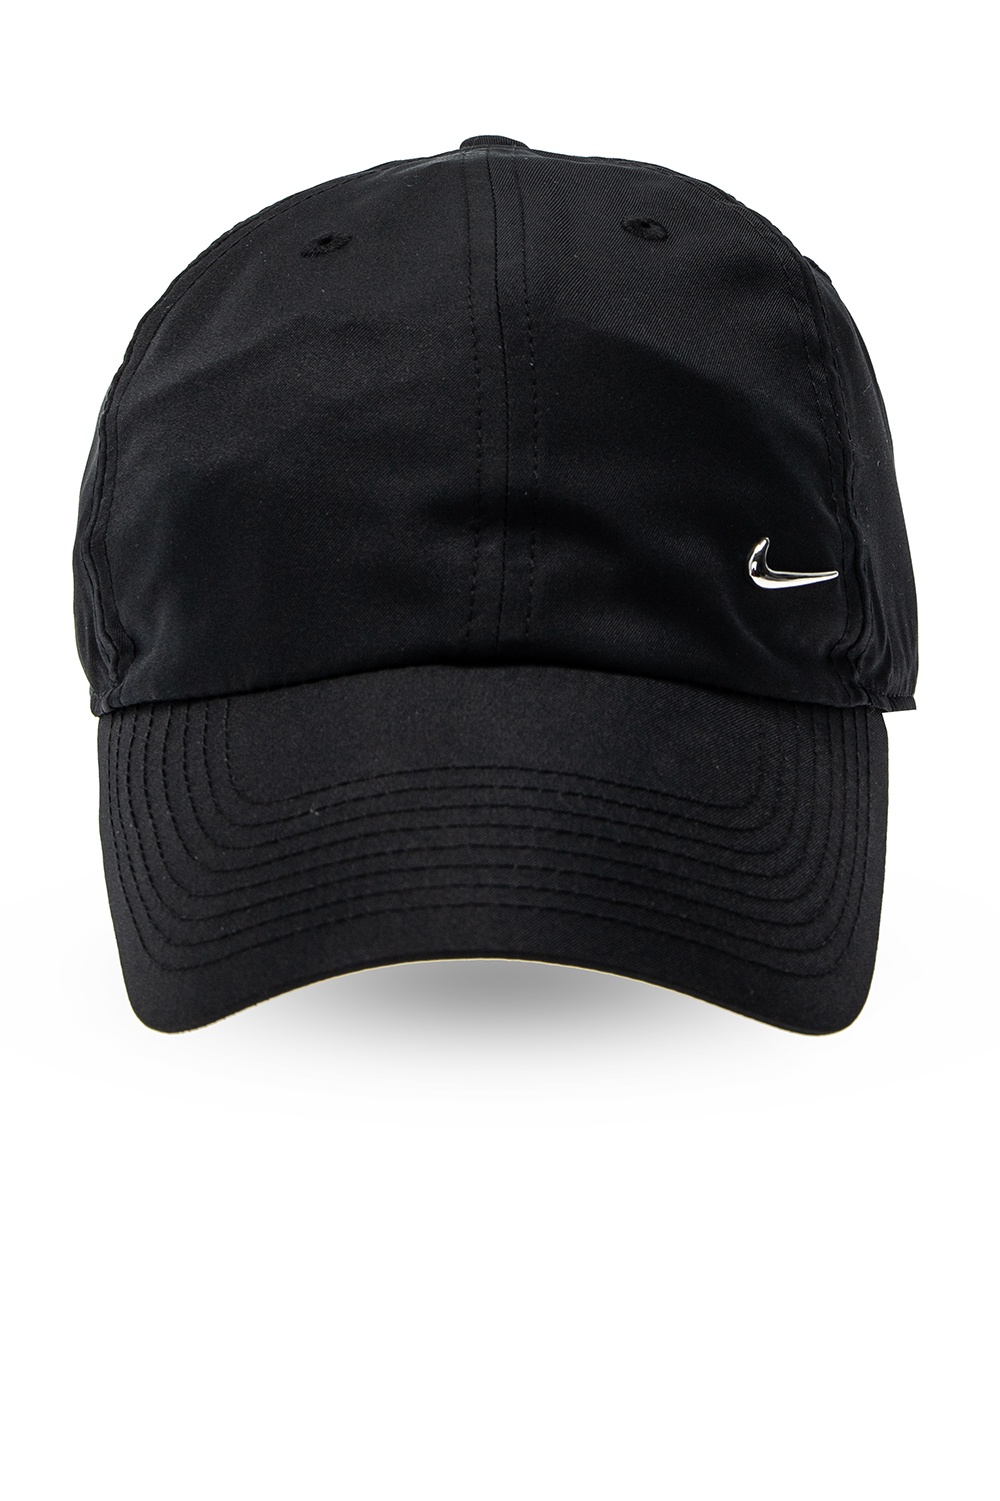 Baseball cap with logo Nike - Vitkac 